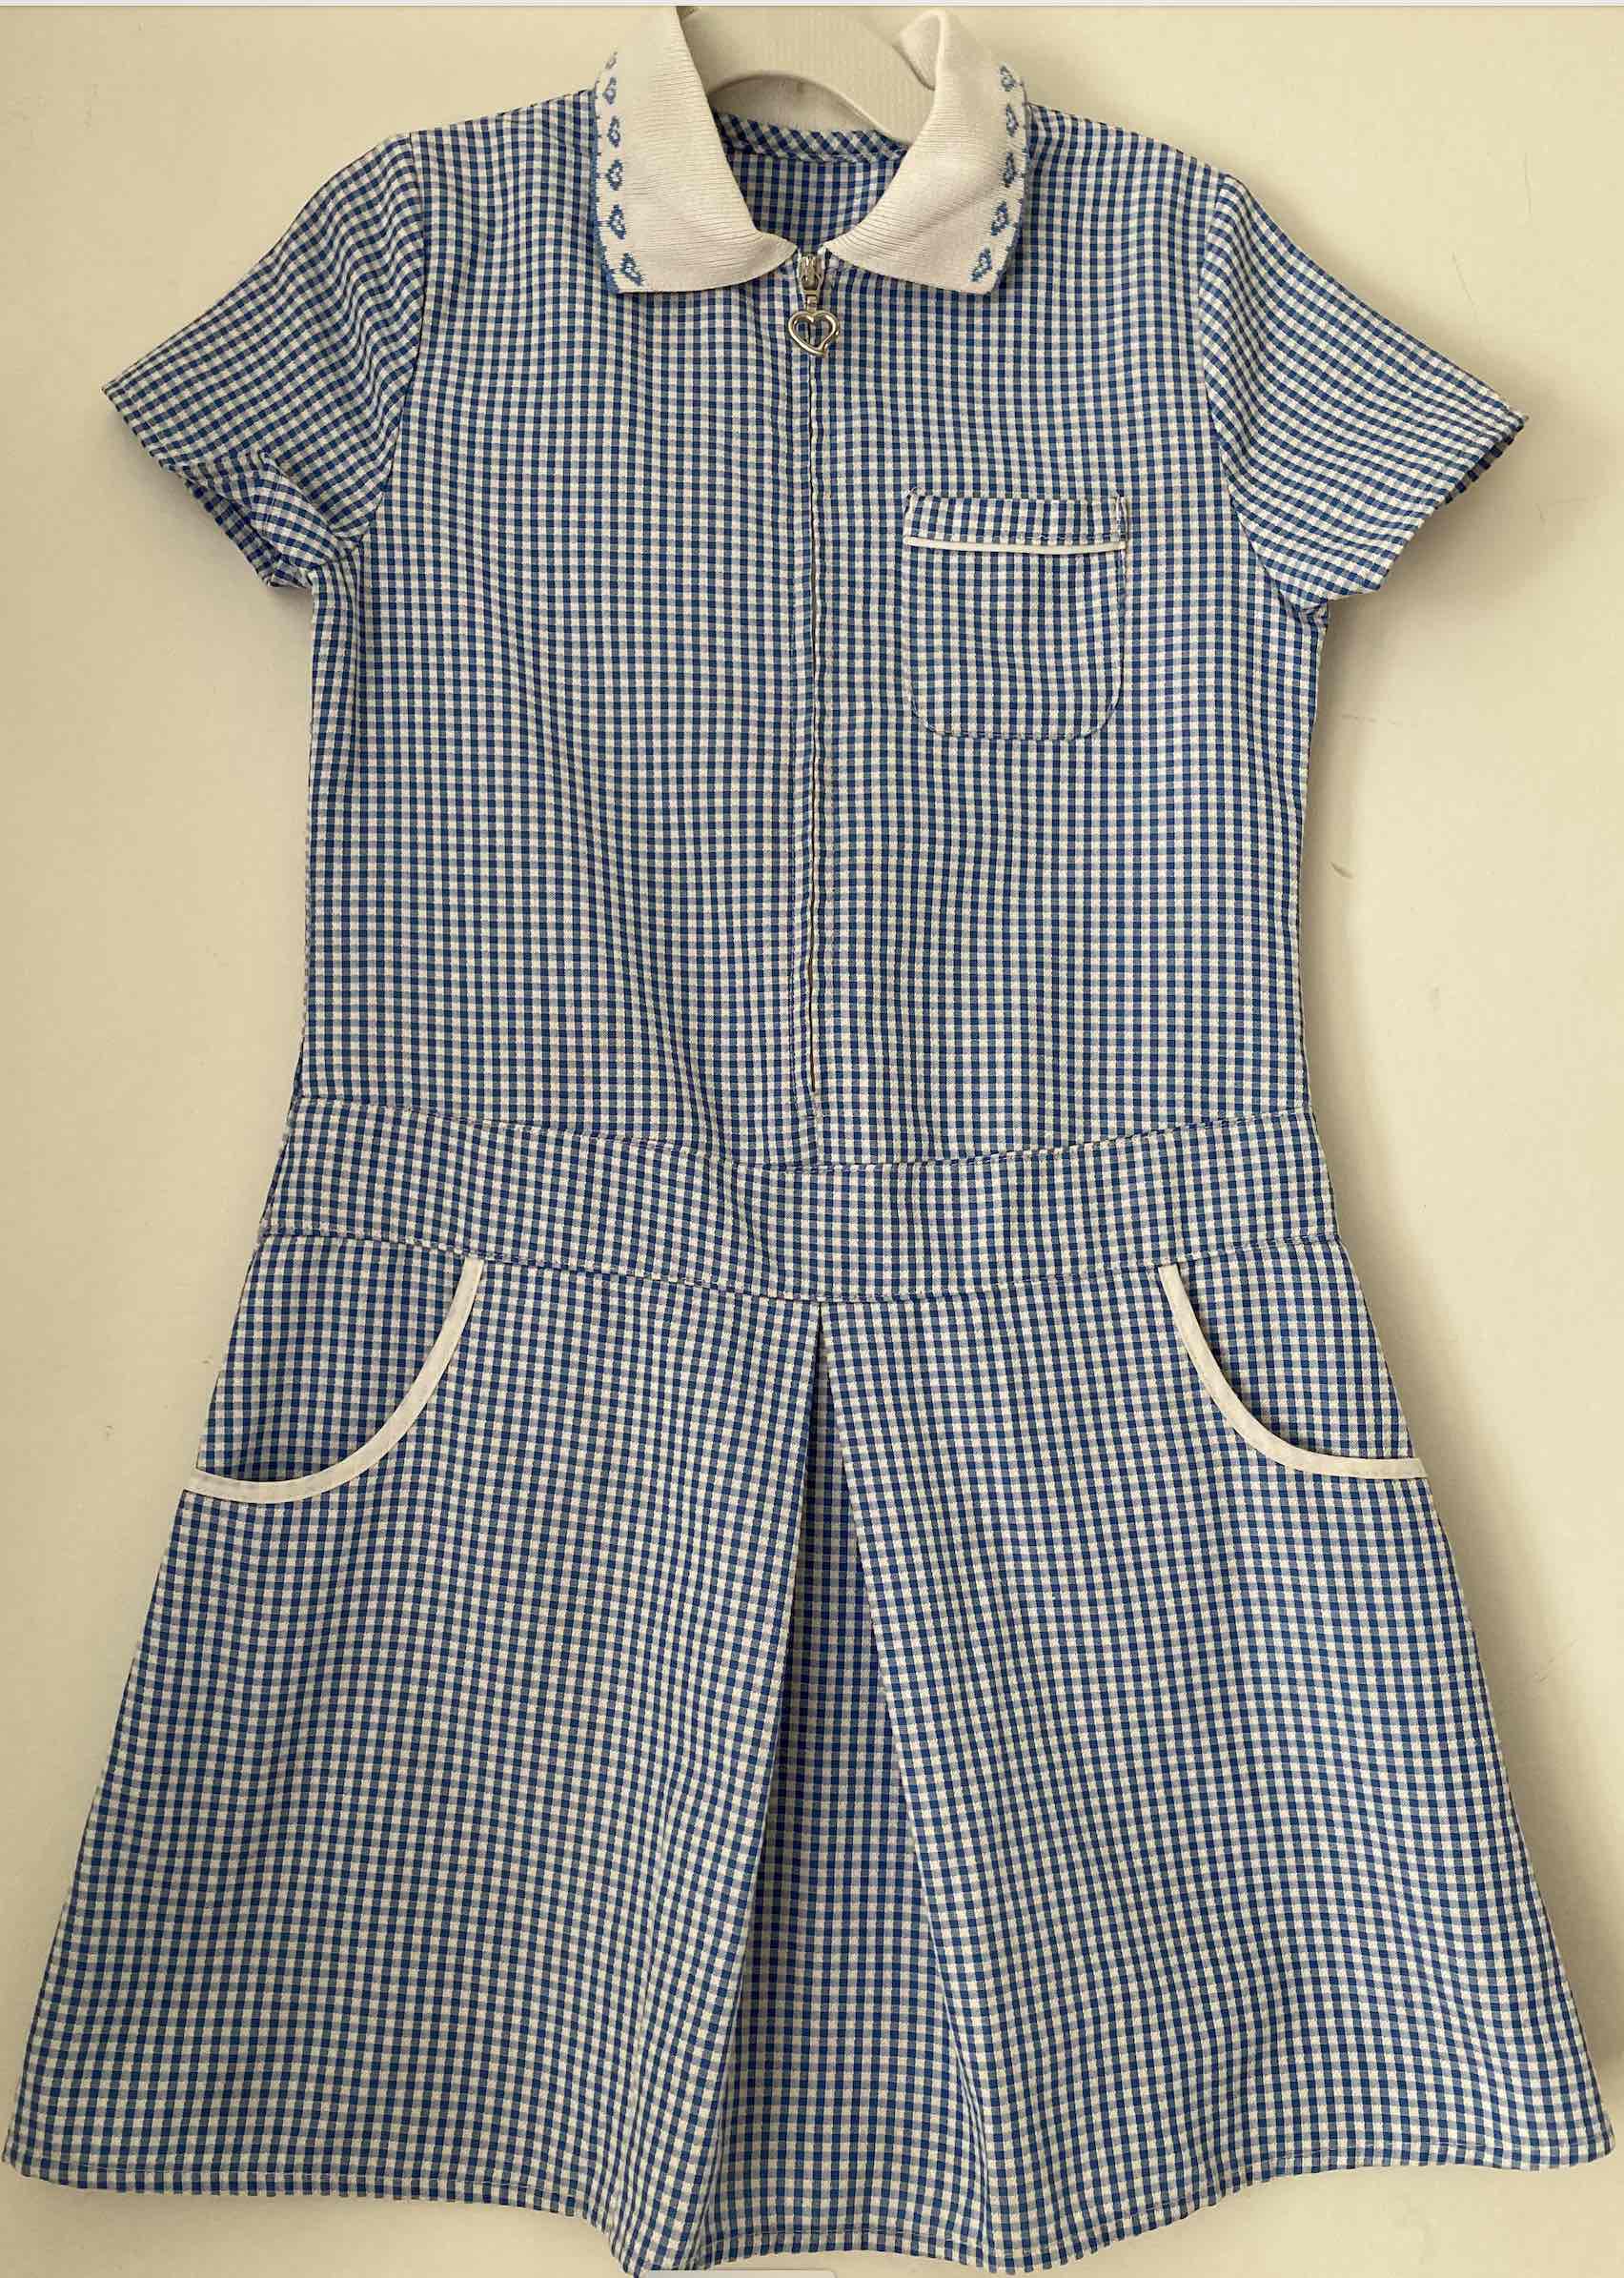 Girls' Sporty Navy Gingham Summer Dress, Zip Front, Drop Waist, Box-pleats, Breast Pocket 5-6 Y